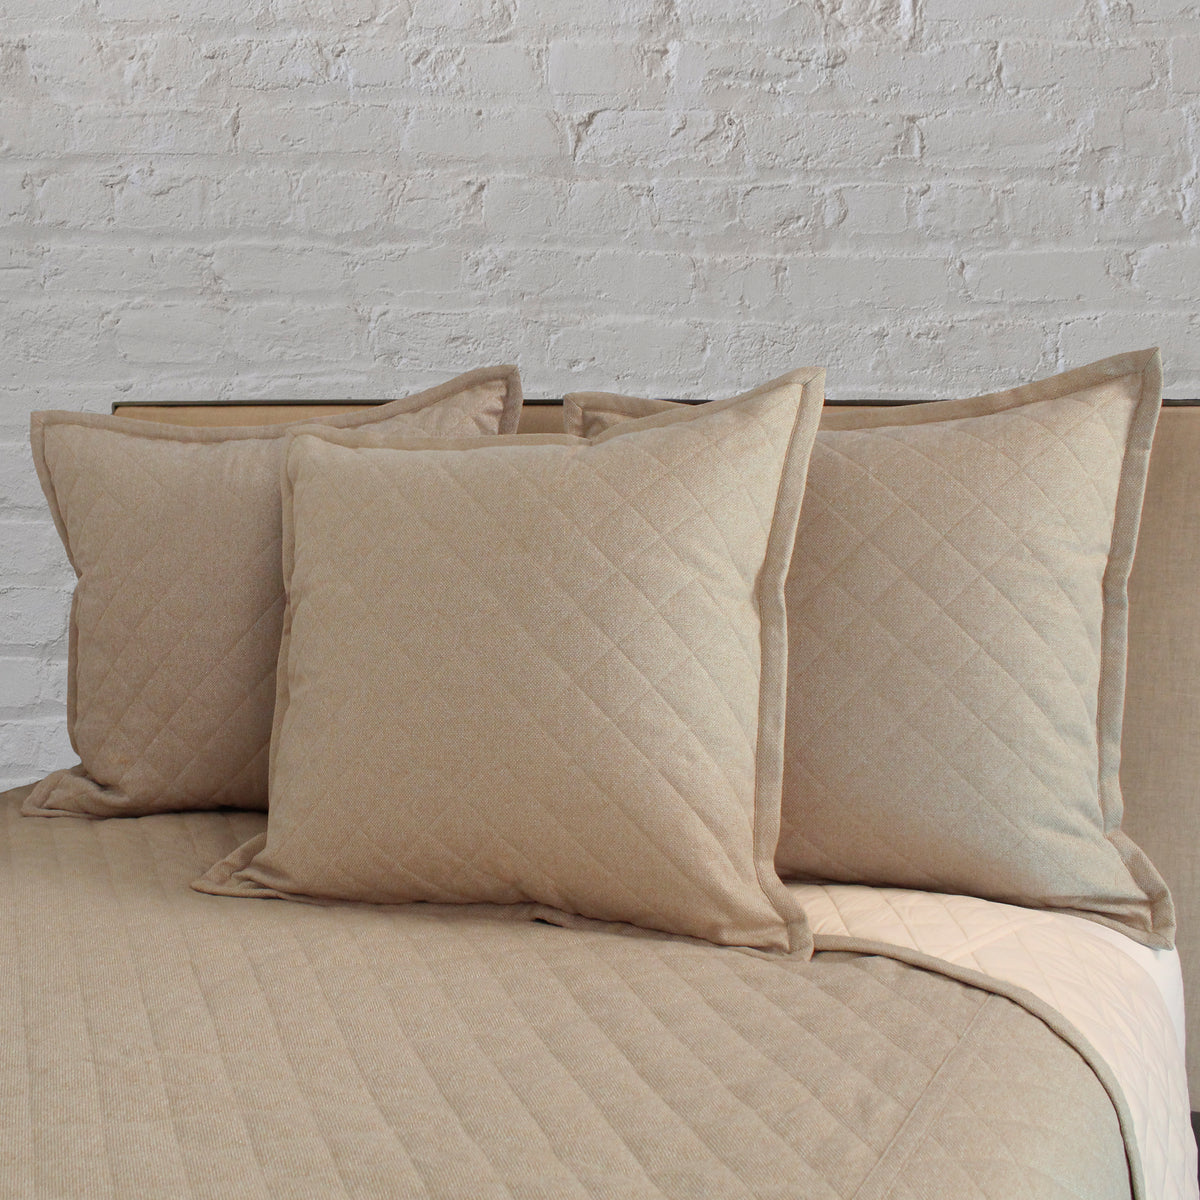 Levtex Home Duvet Cover -Washed Linen in Sandstone Full/Queen, Beige